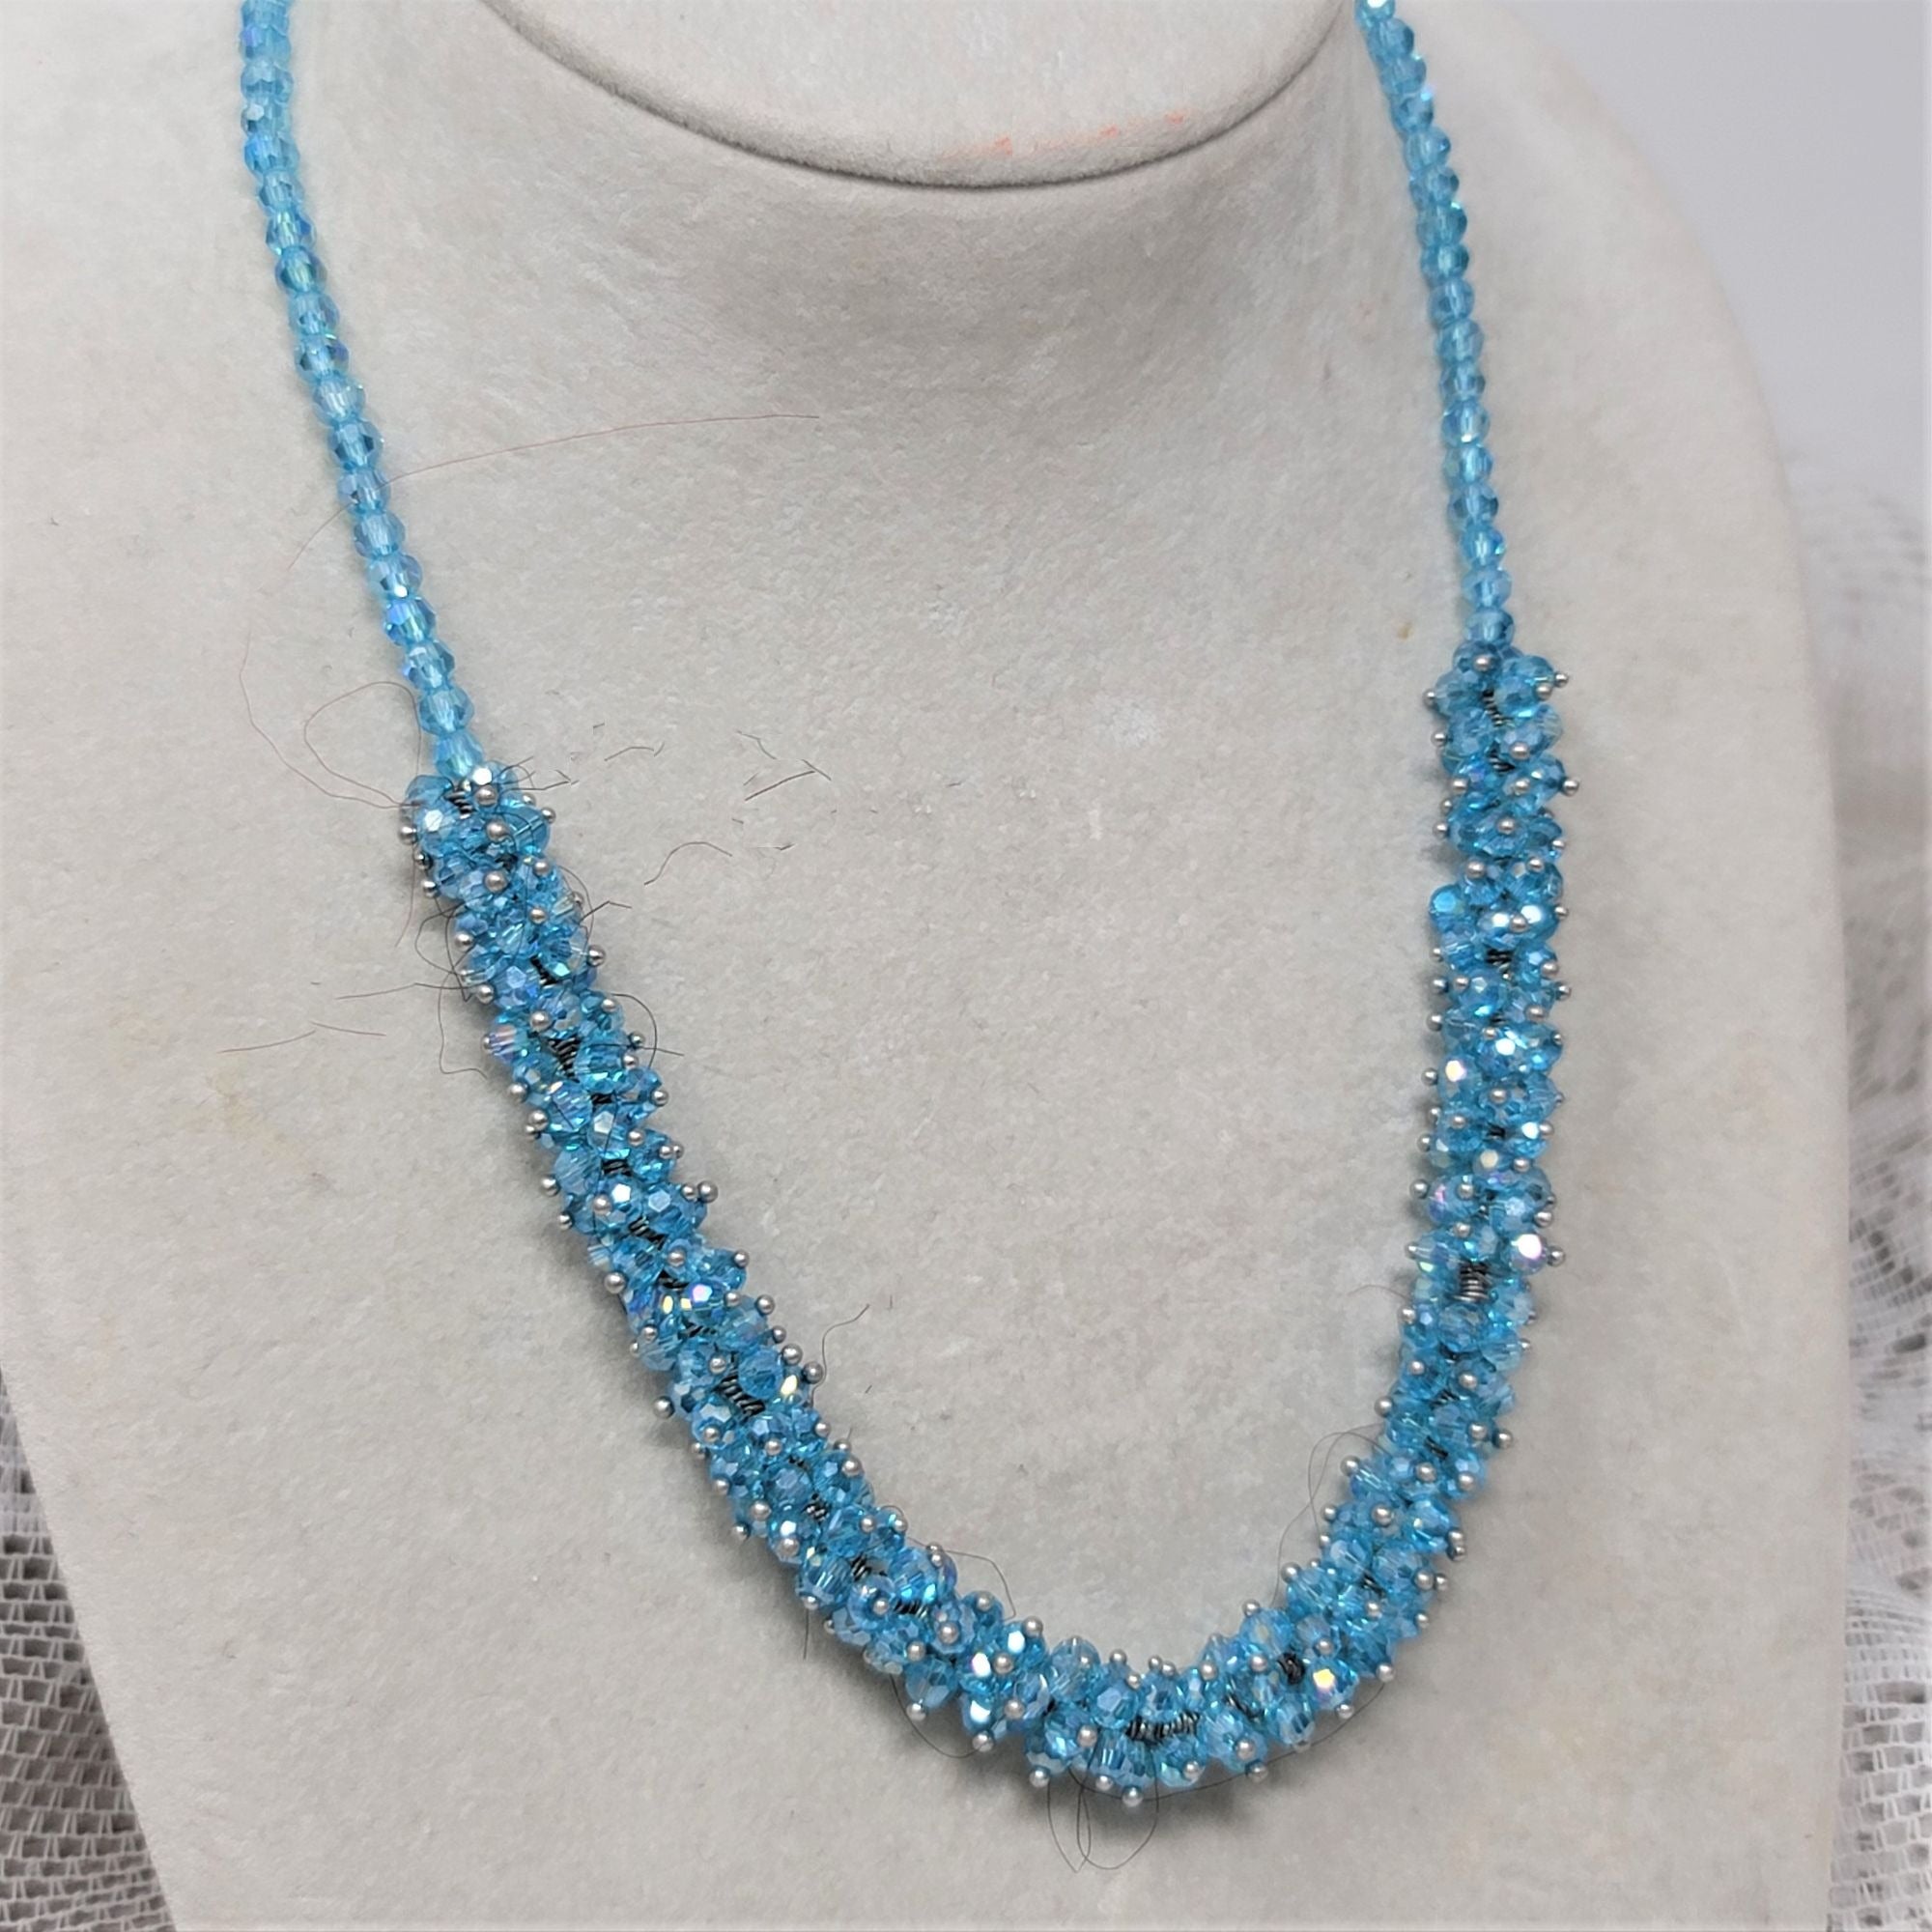 Twinkling Glass Bead Necklace Beautiful Sky Blue